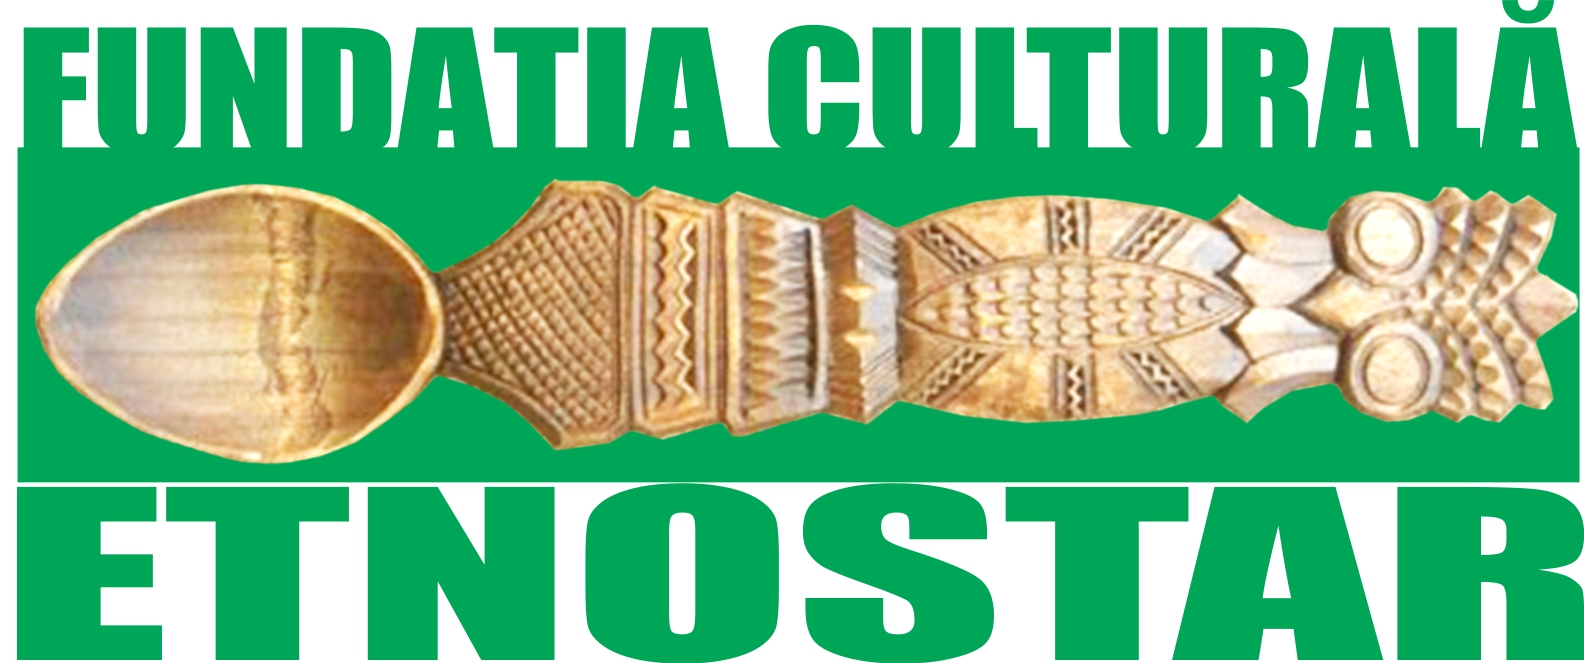 FUNDATIA CULTURALA ETNOSTAR logo